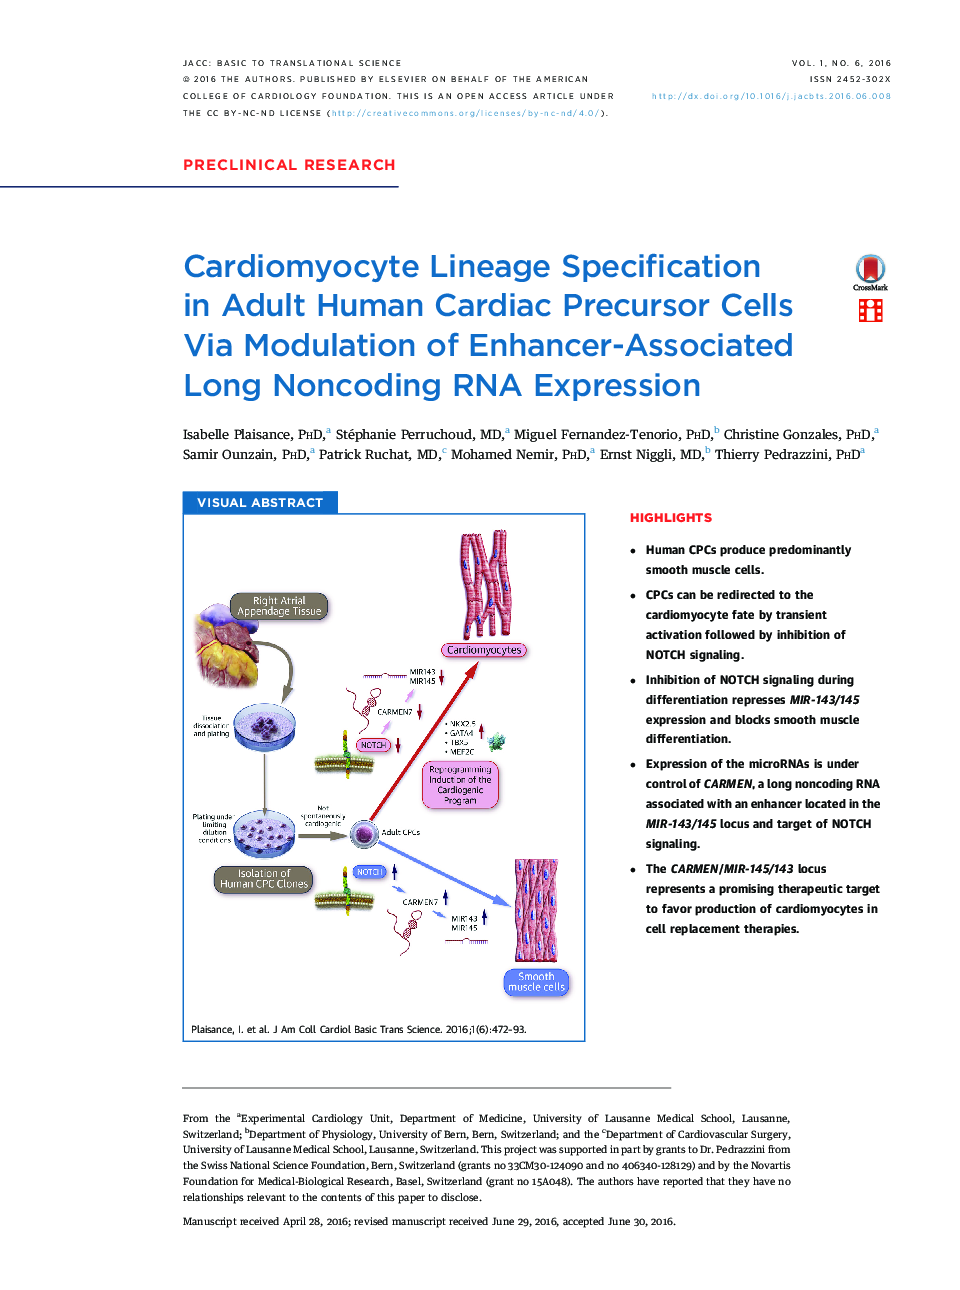 Cardiomyocyte Lineage Specification inÂ Adult Human Cardiac Precursor Cells ViaÂ Modulation of Enhancer-Associated Long Noncoding RNA Expression